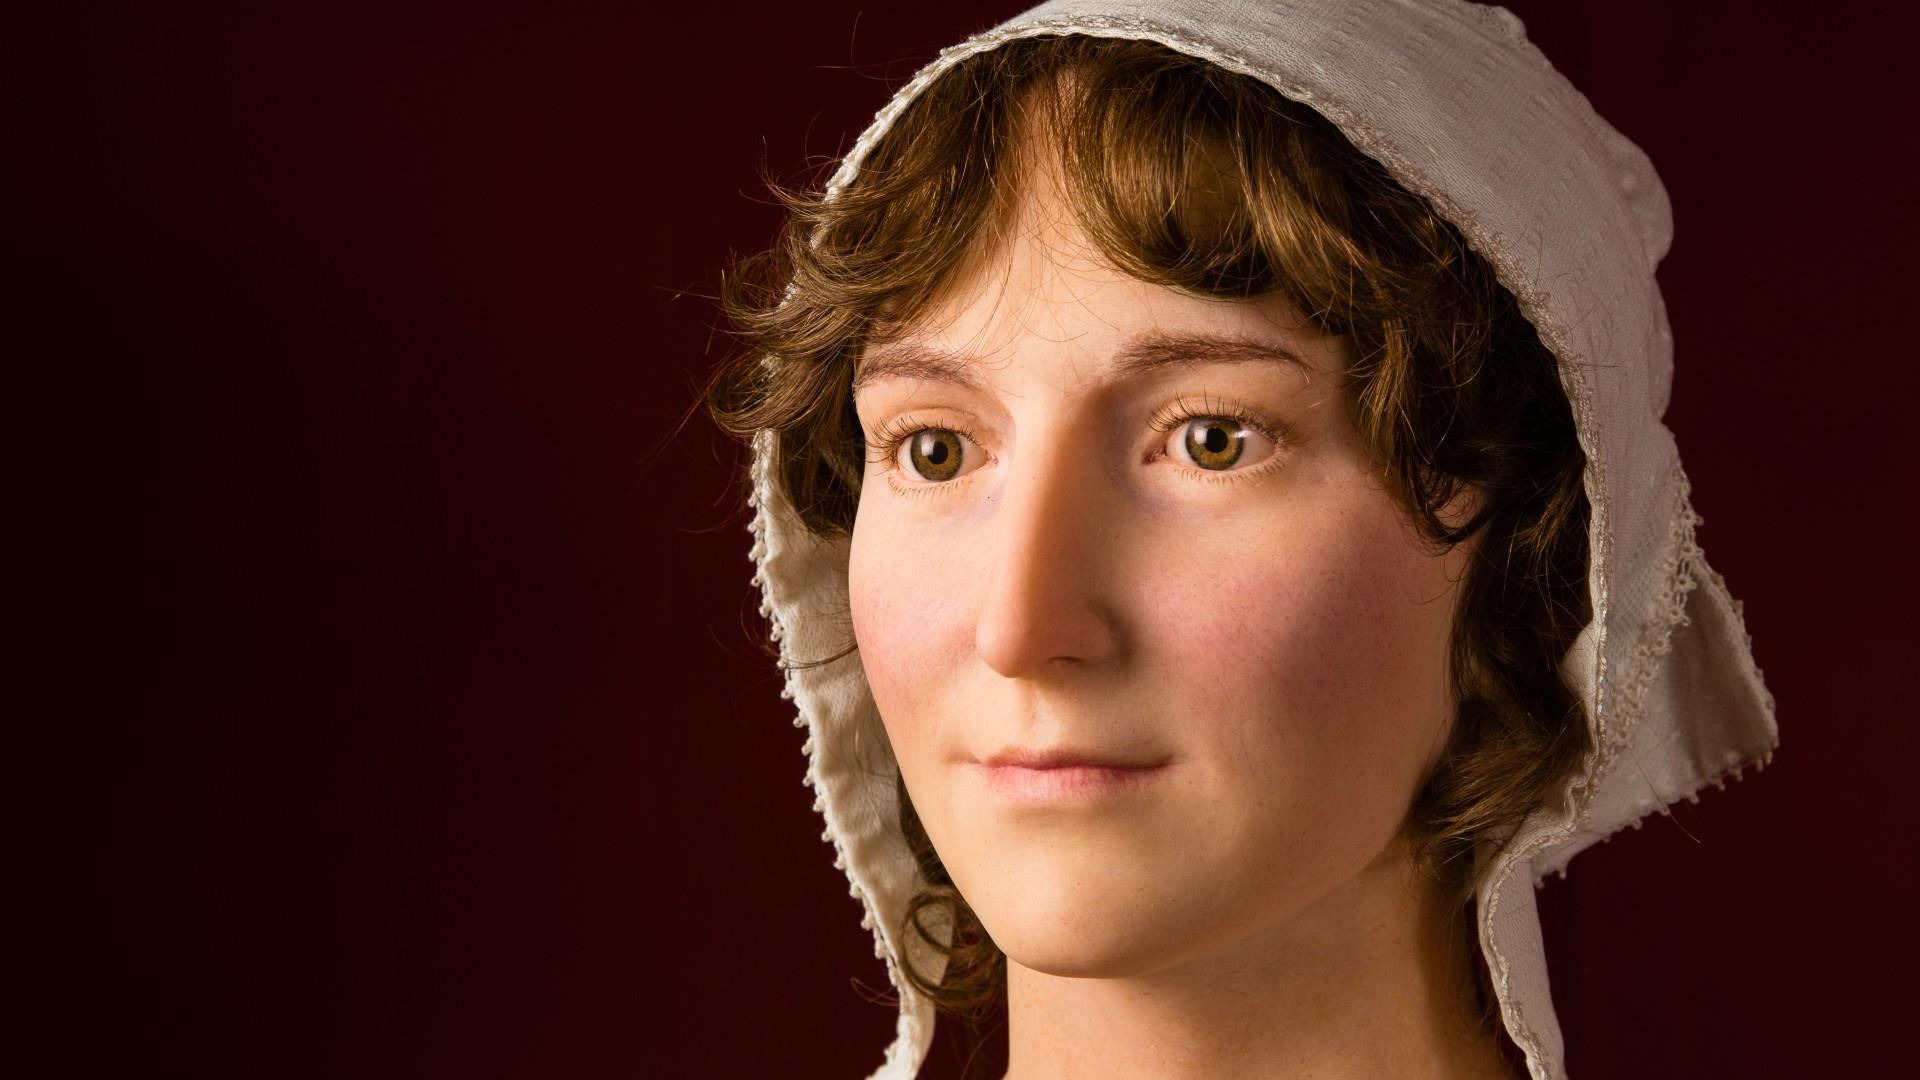 A waxwork of Jane Austen